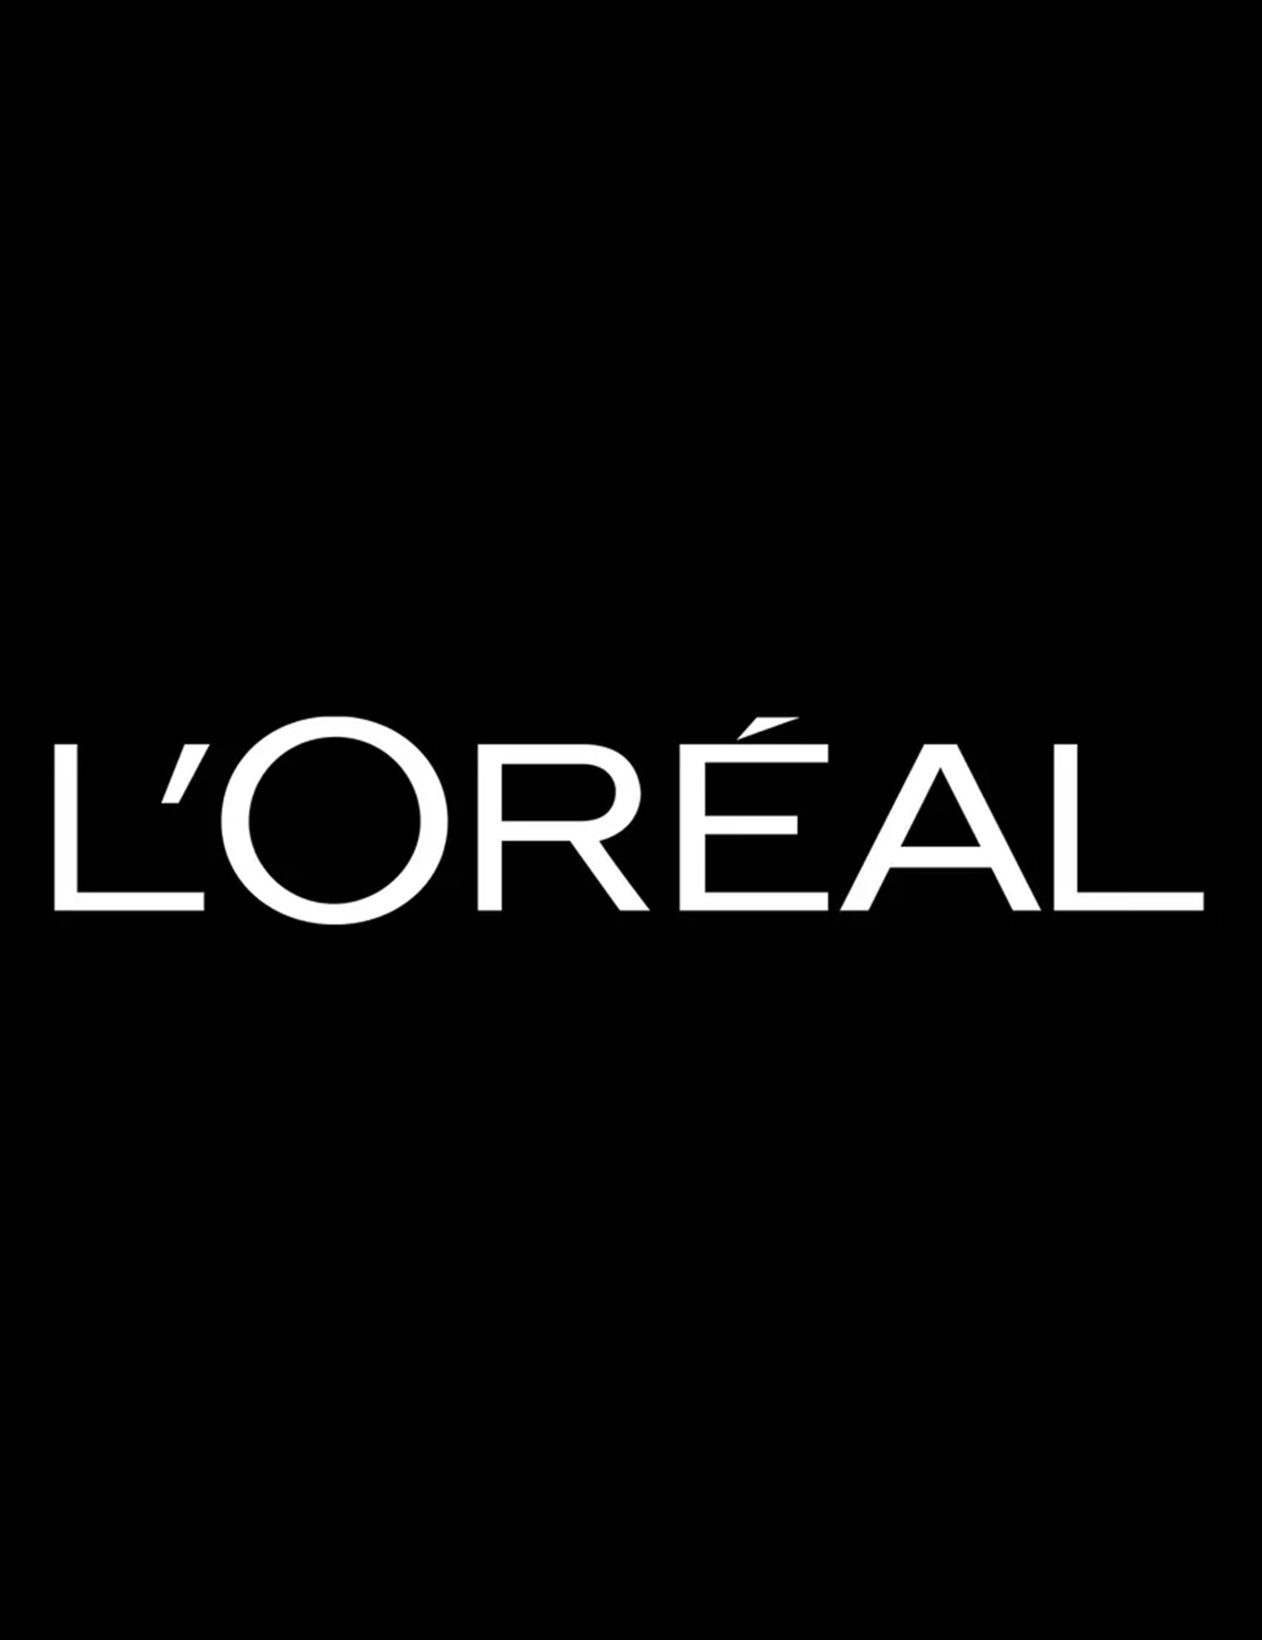 L’Oréal confirms a breakthrough in tissue engineering